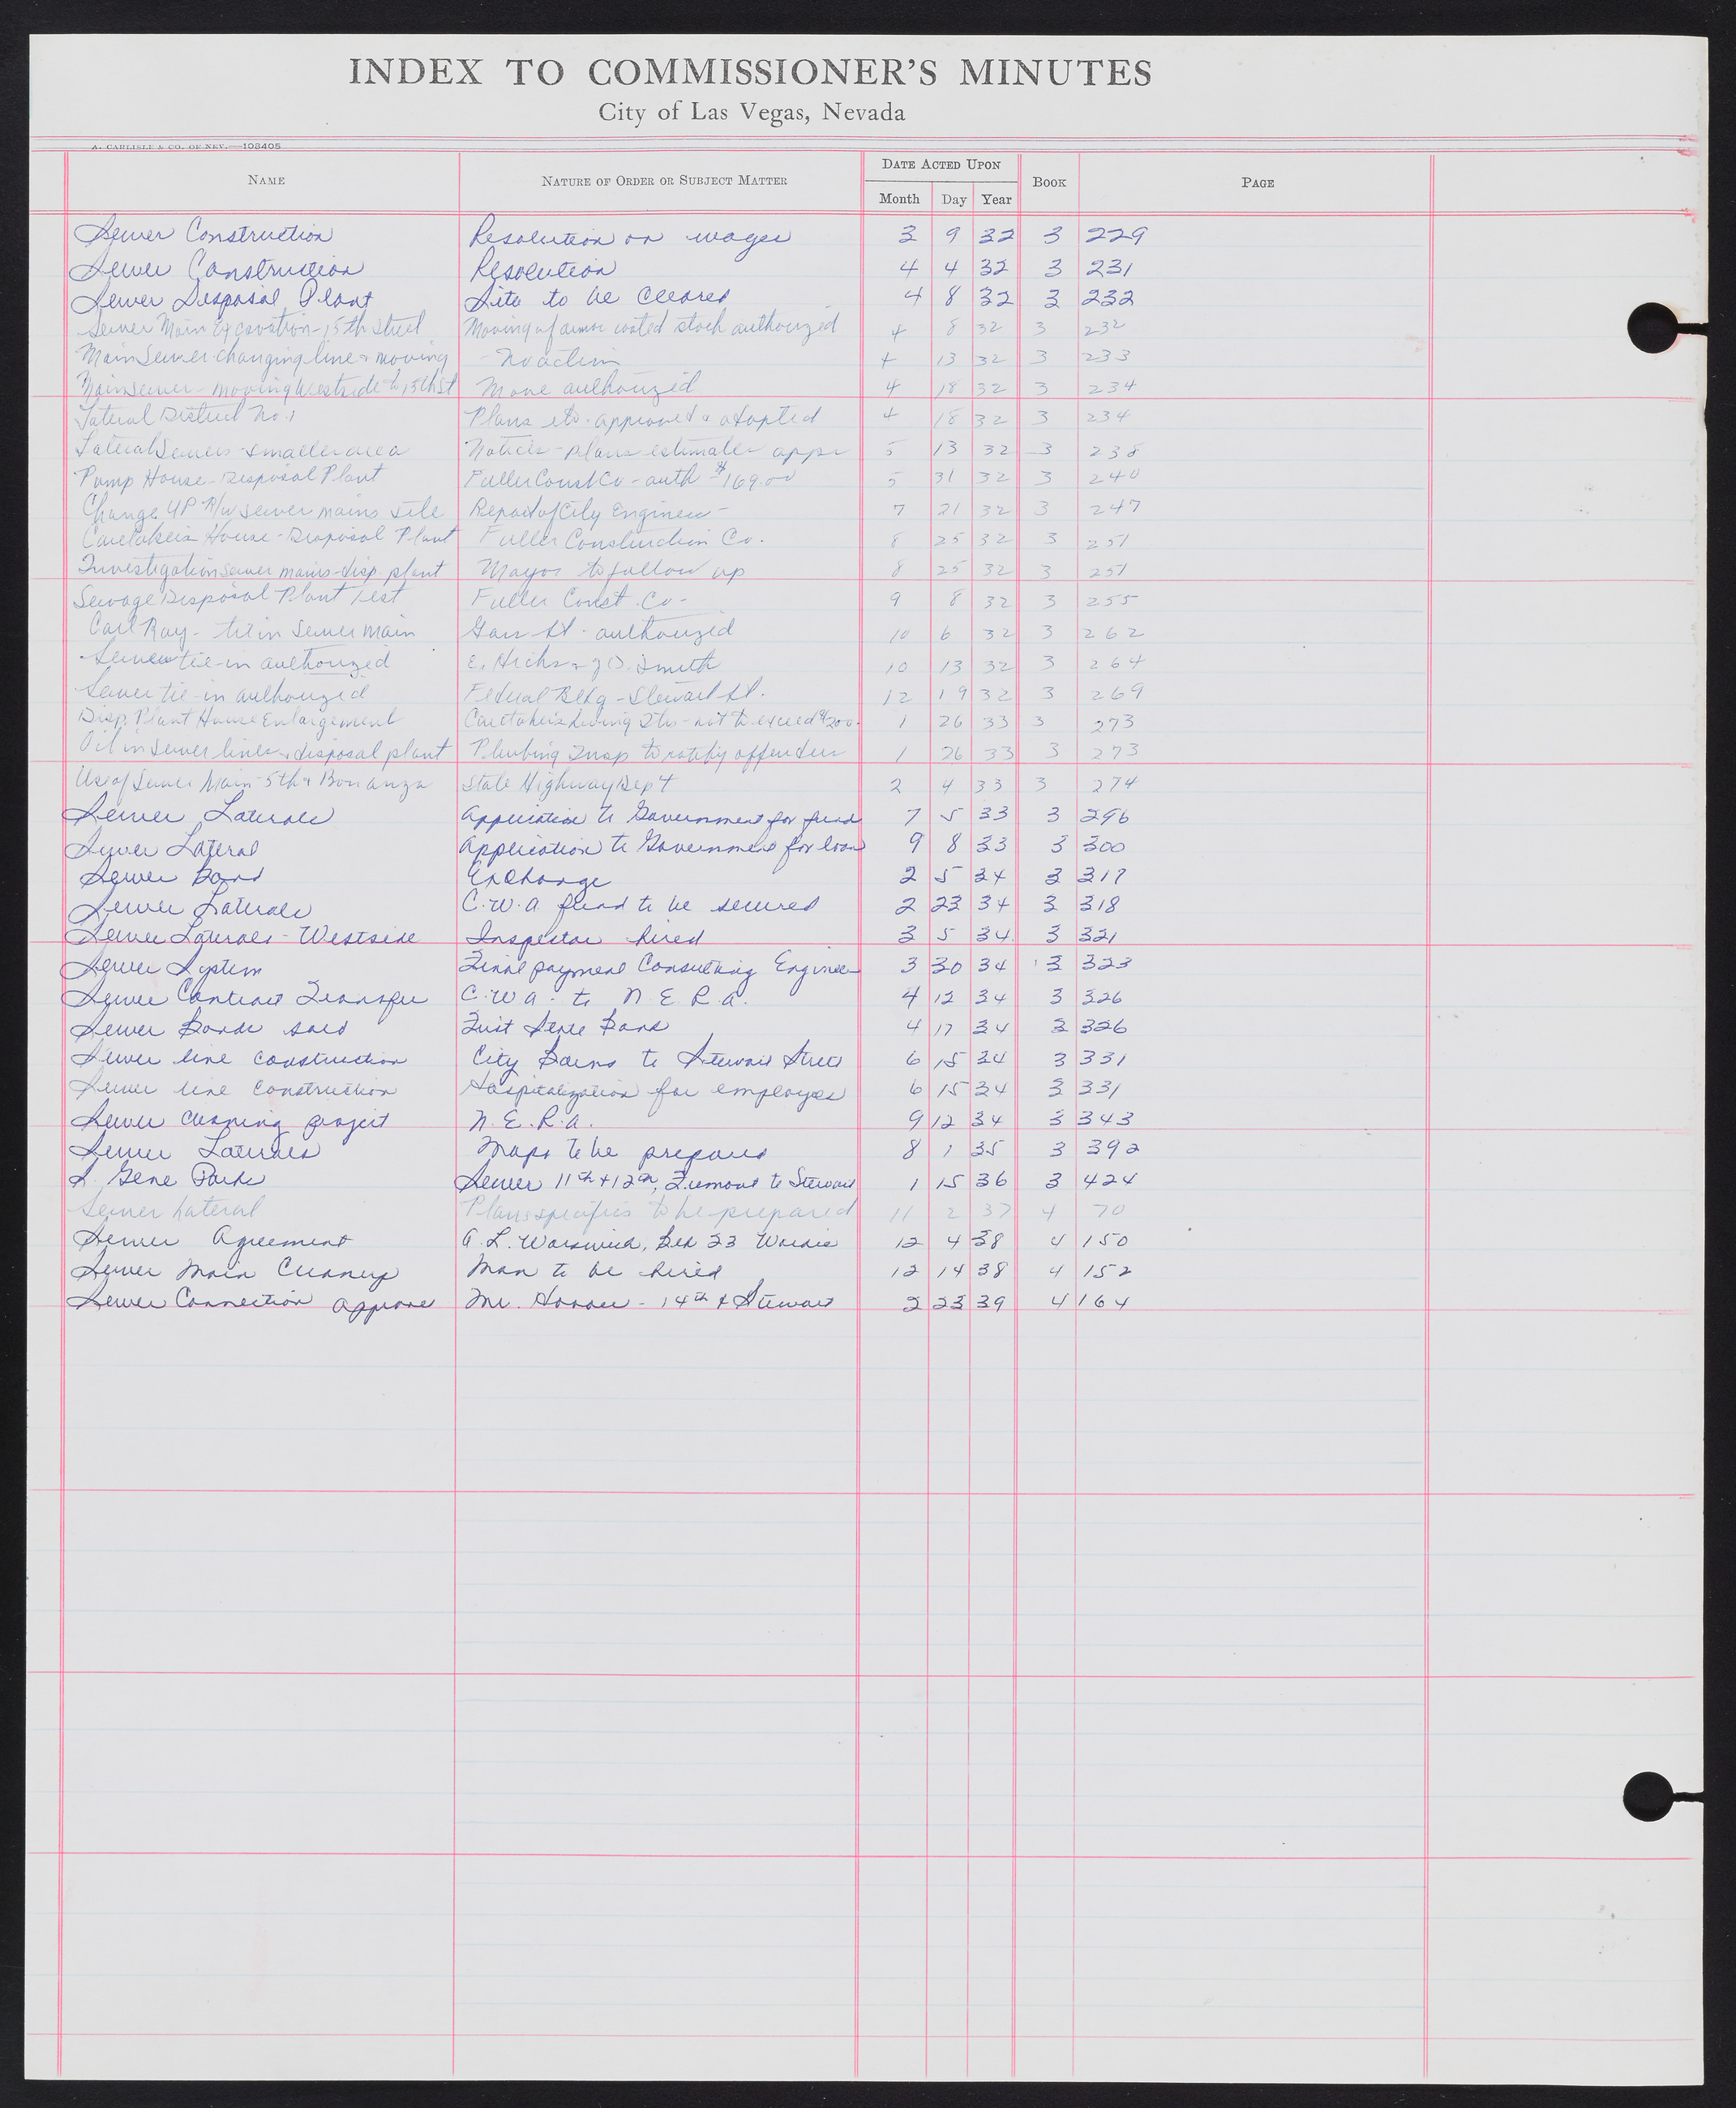 Las Vegas City Commission Minutes Index 1, 1911-1960: documents, item 303